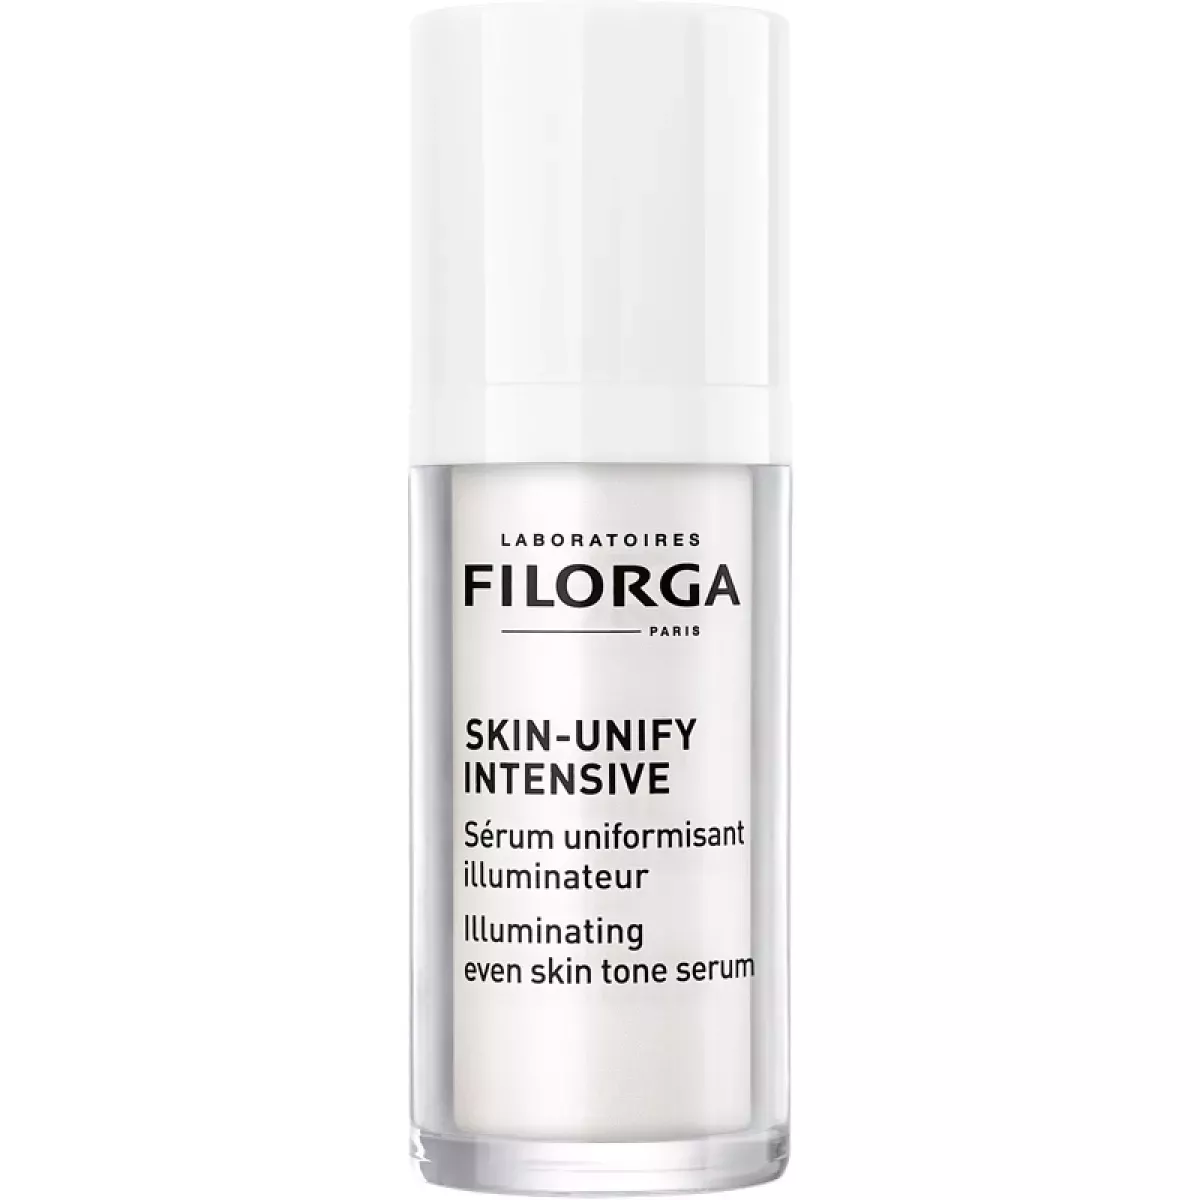 #1 - Filorga Skin-Unify Intensive 30 ml